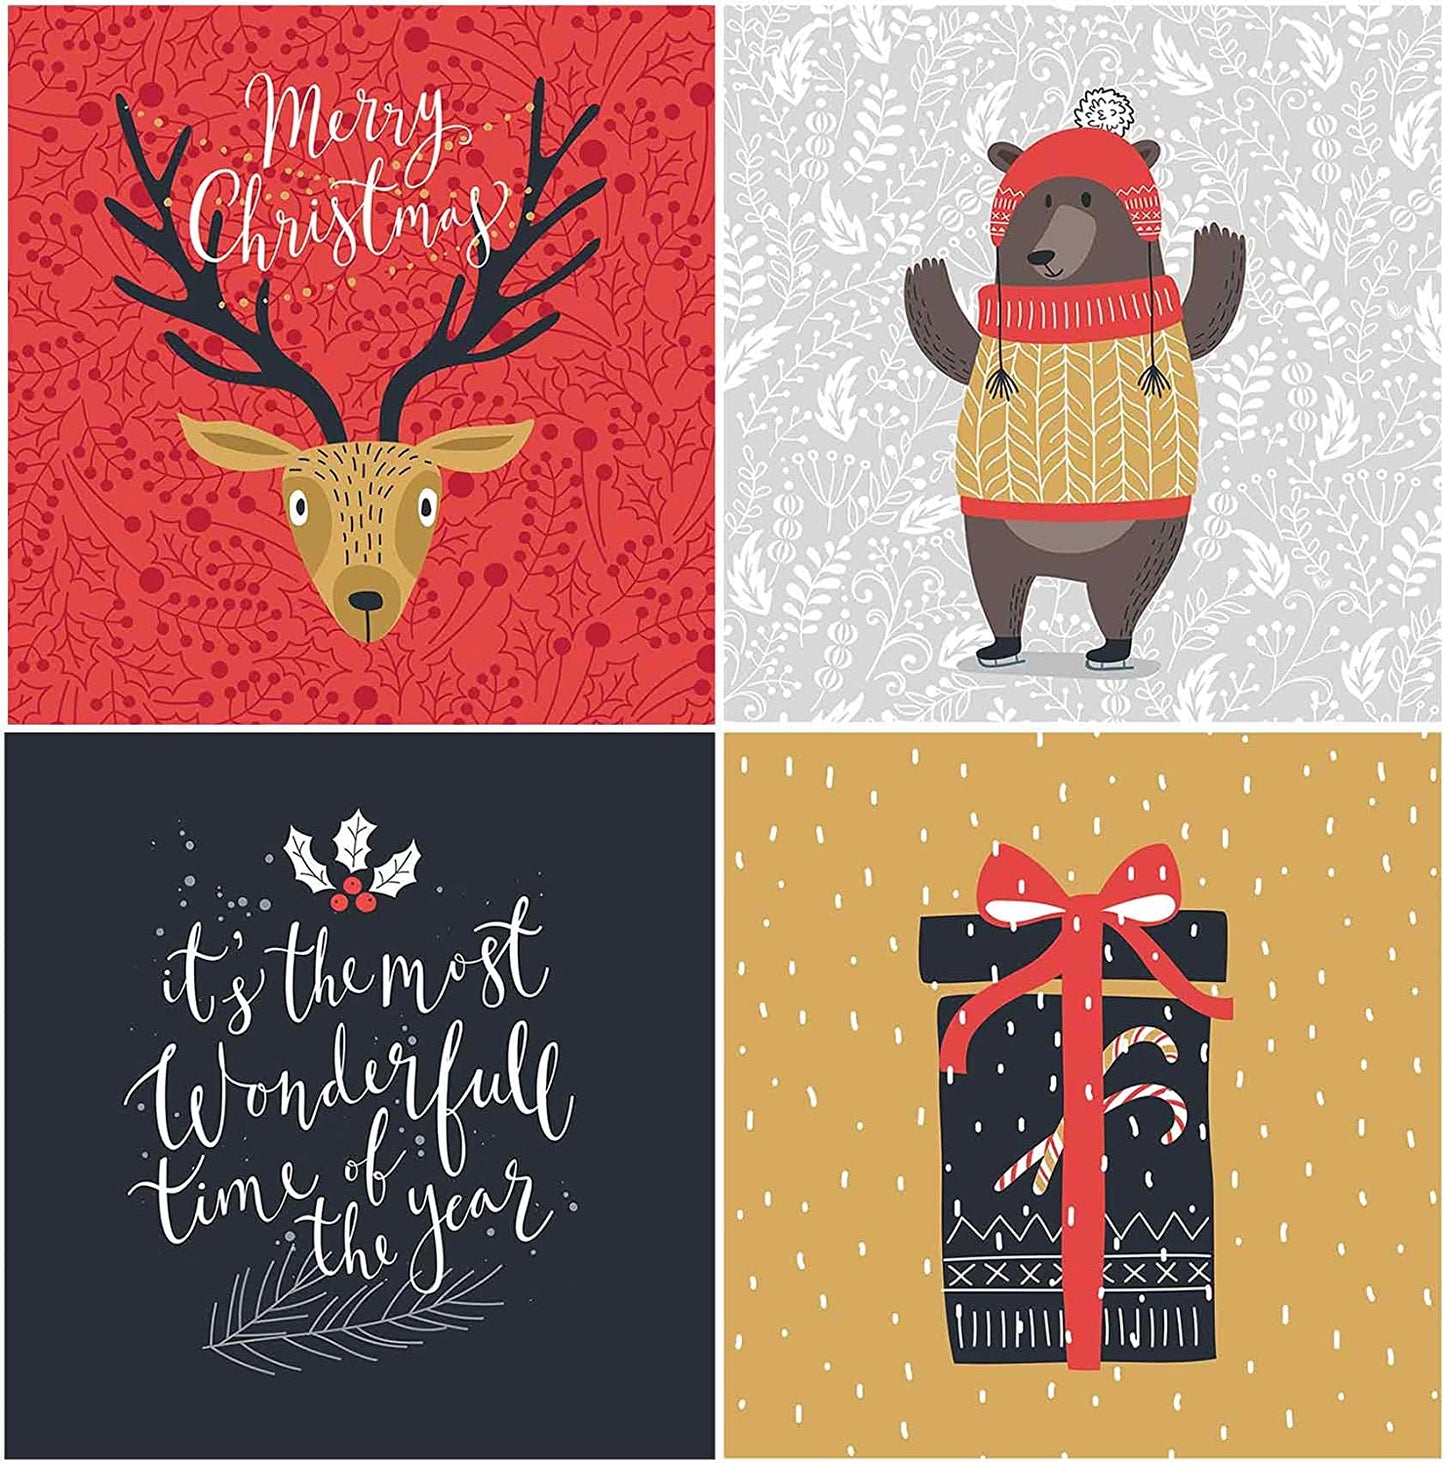 20 x Christmas Cards Multi Pack Volume 2